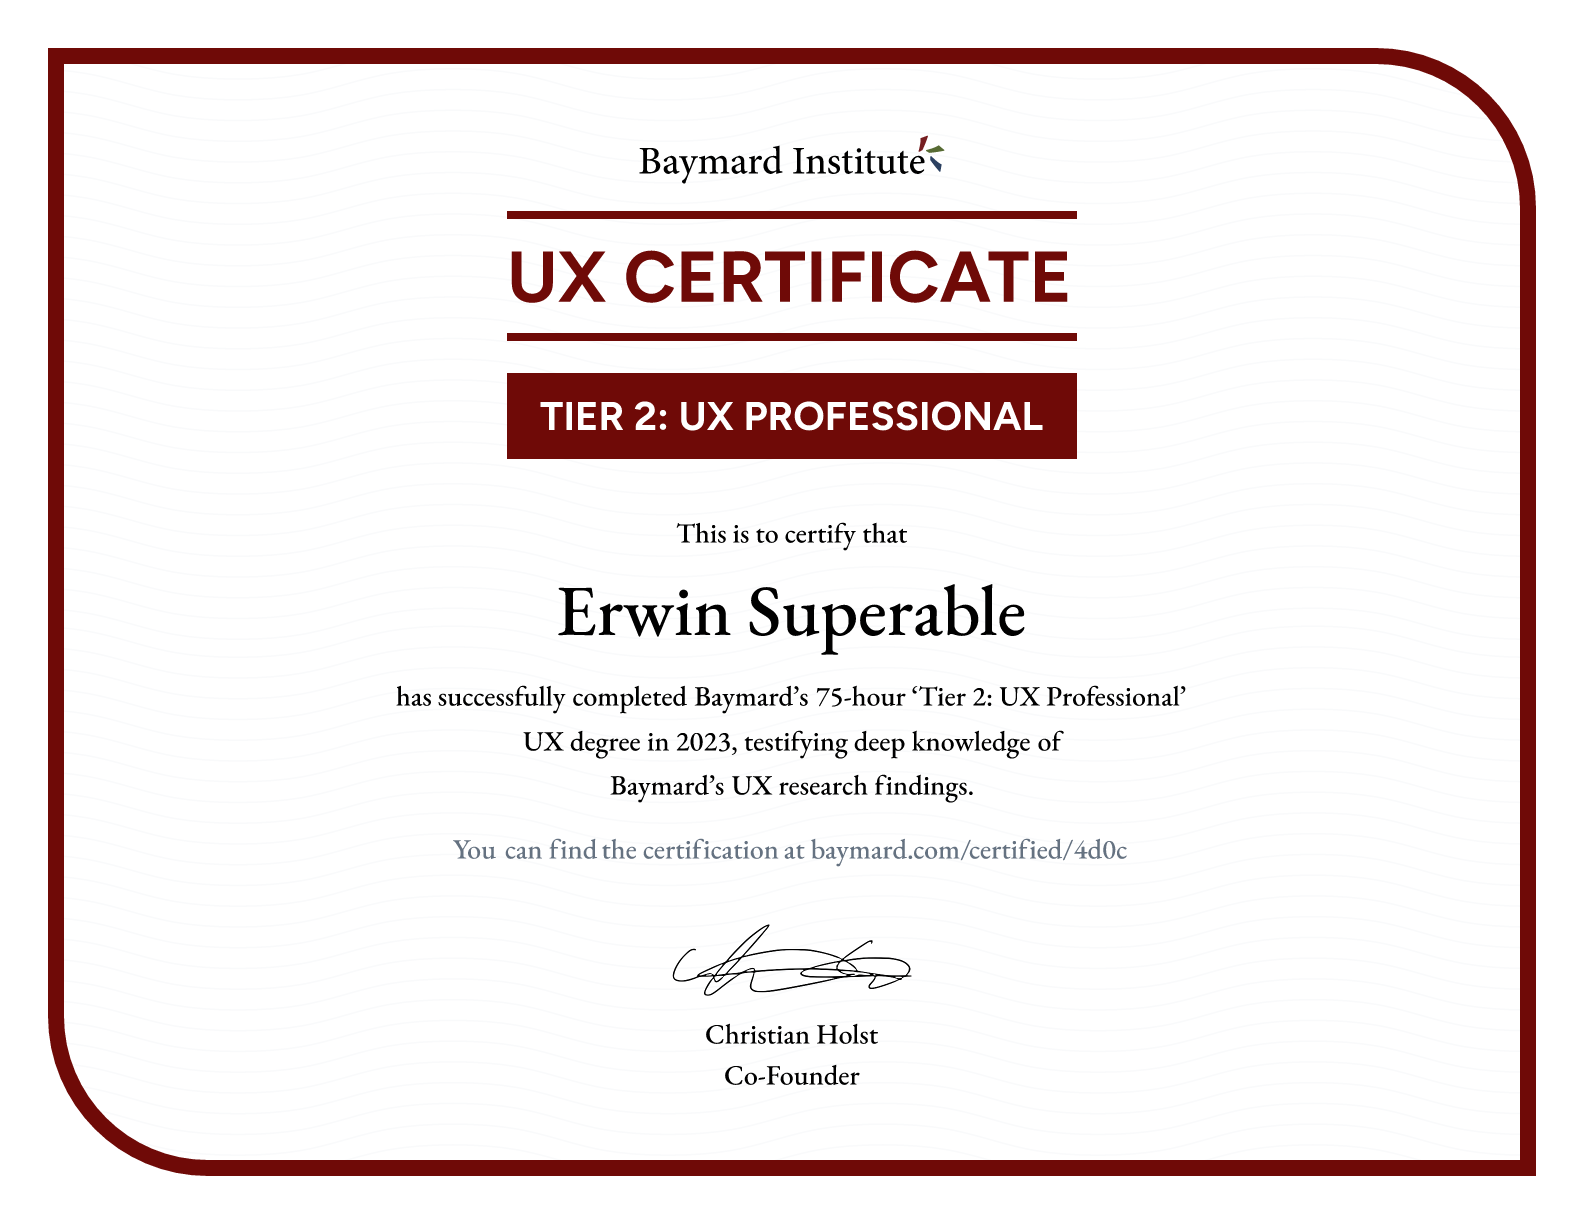 Erwin Superable’s certificate